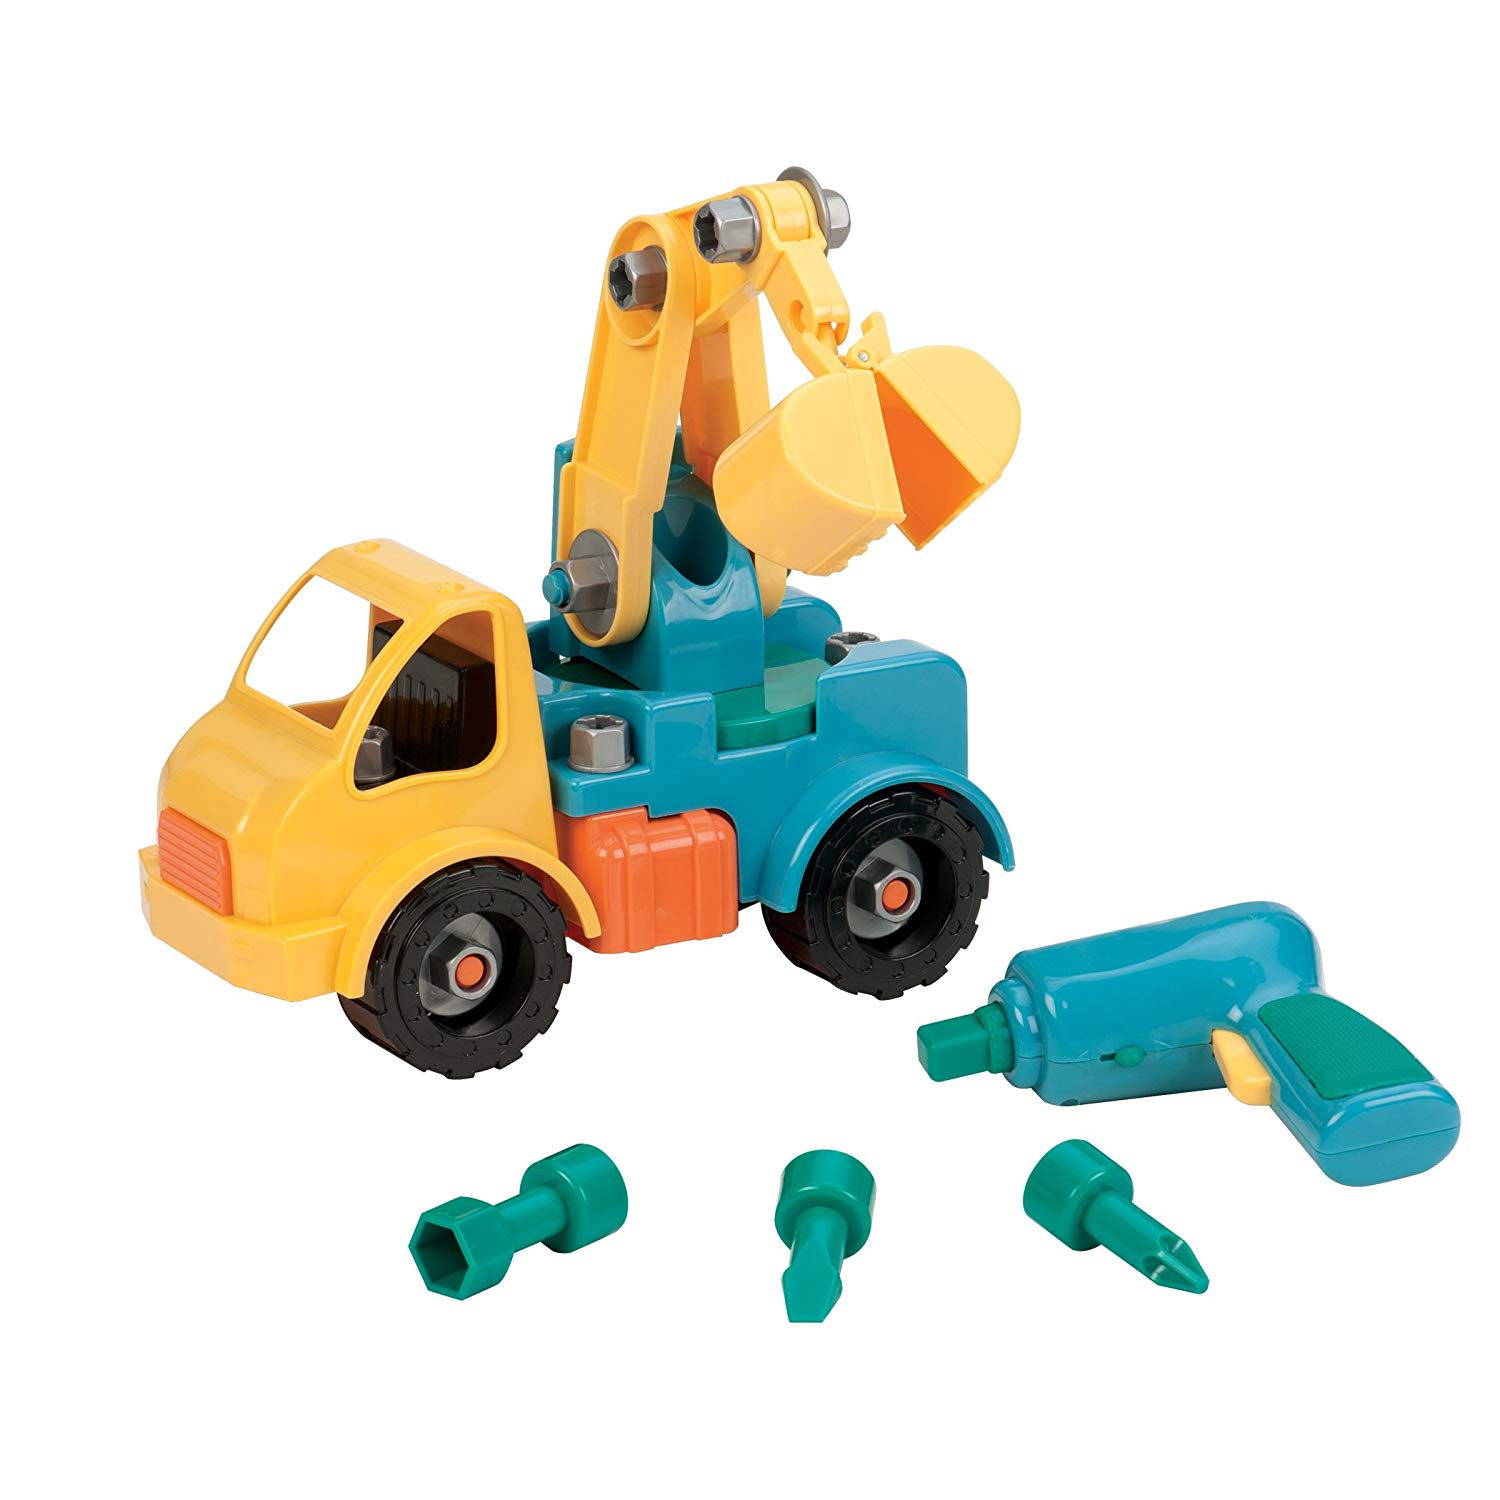 Amazon.com: Battat Take Apart Crane Construction Toy Truck: Toys & Games